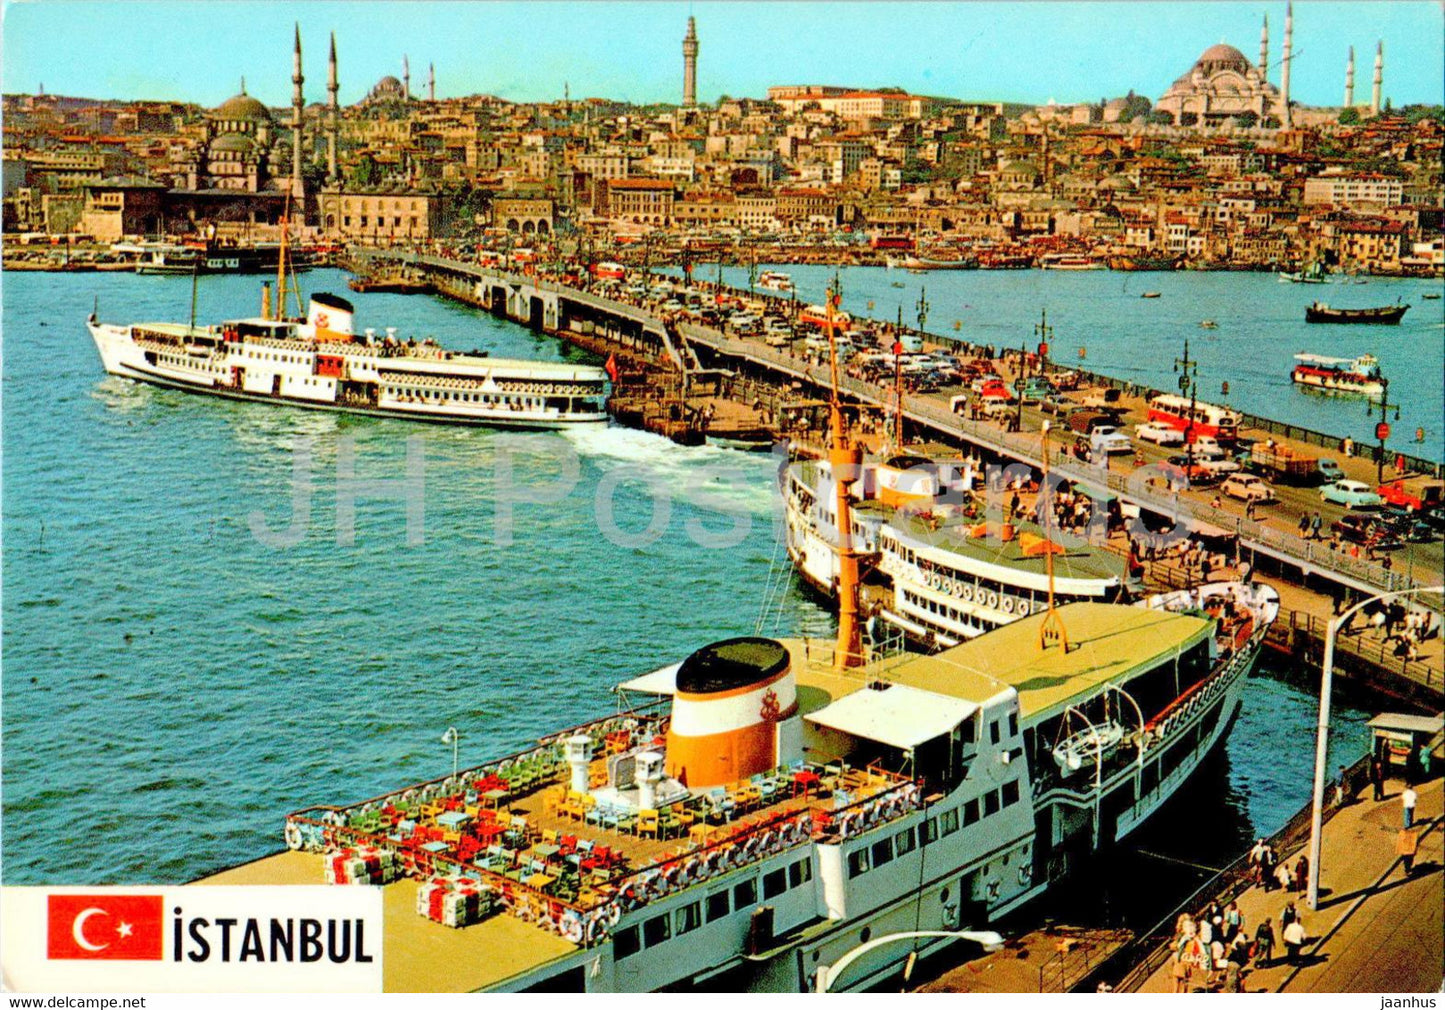 Istanbul - Galata Bridge - New Mosque and Suleymaniye - ship - 114 - Turkey - unused - JH Postcards